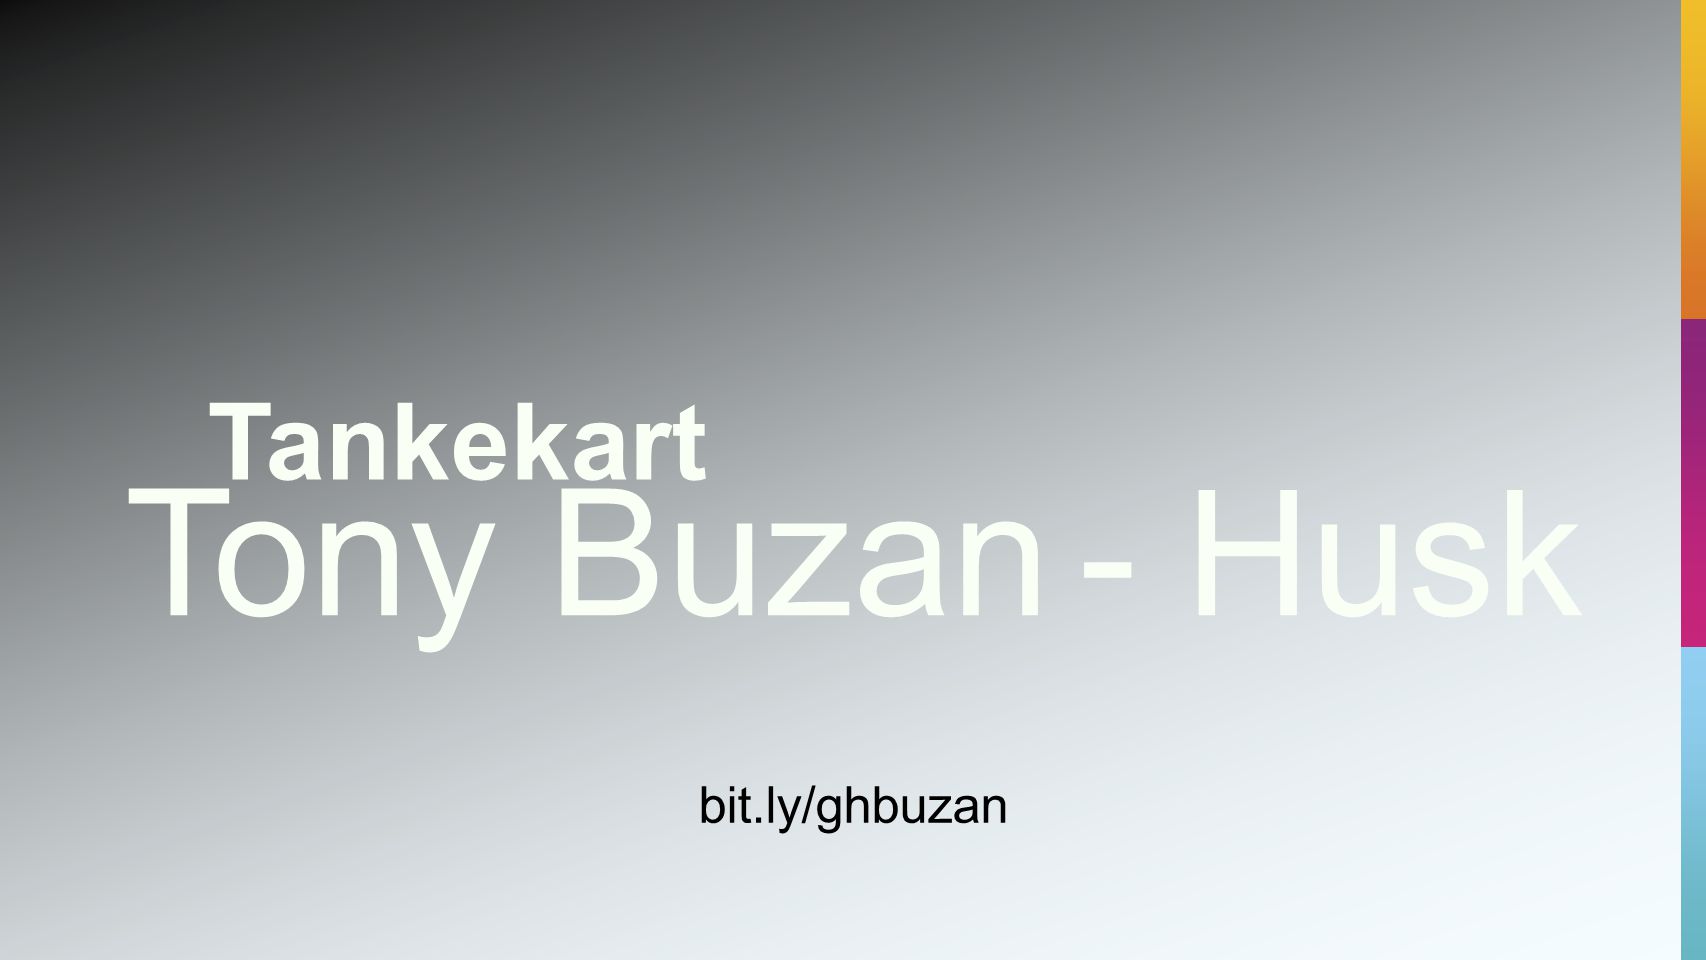 Tony Buzan - Husk bit.ly/ghbuzan